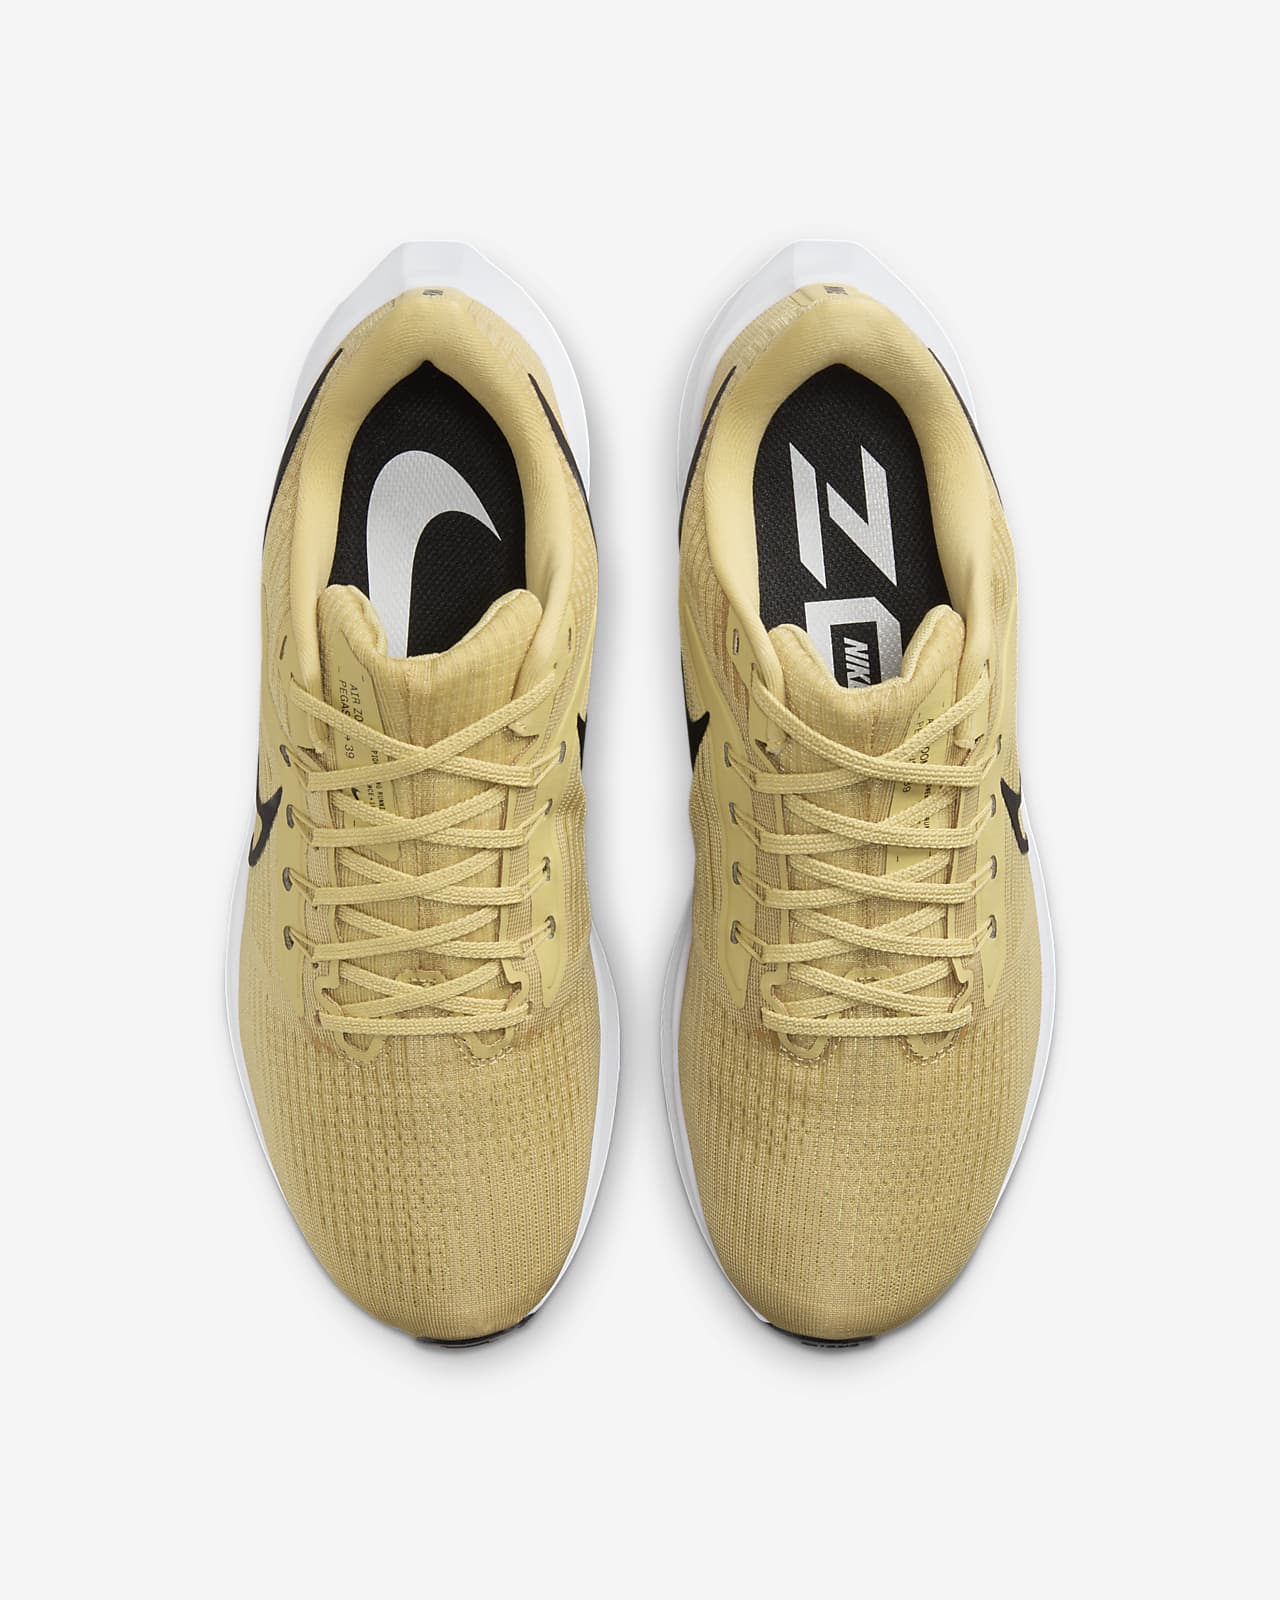 Nike Pegasus 39 Men's Road Running Shoes